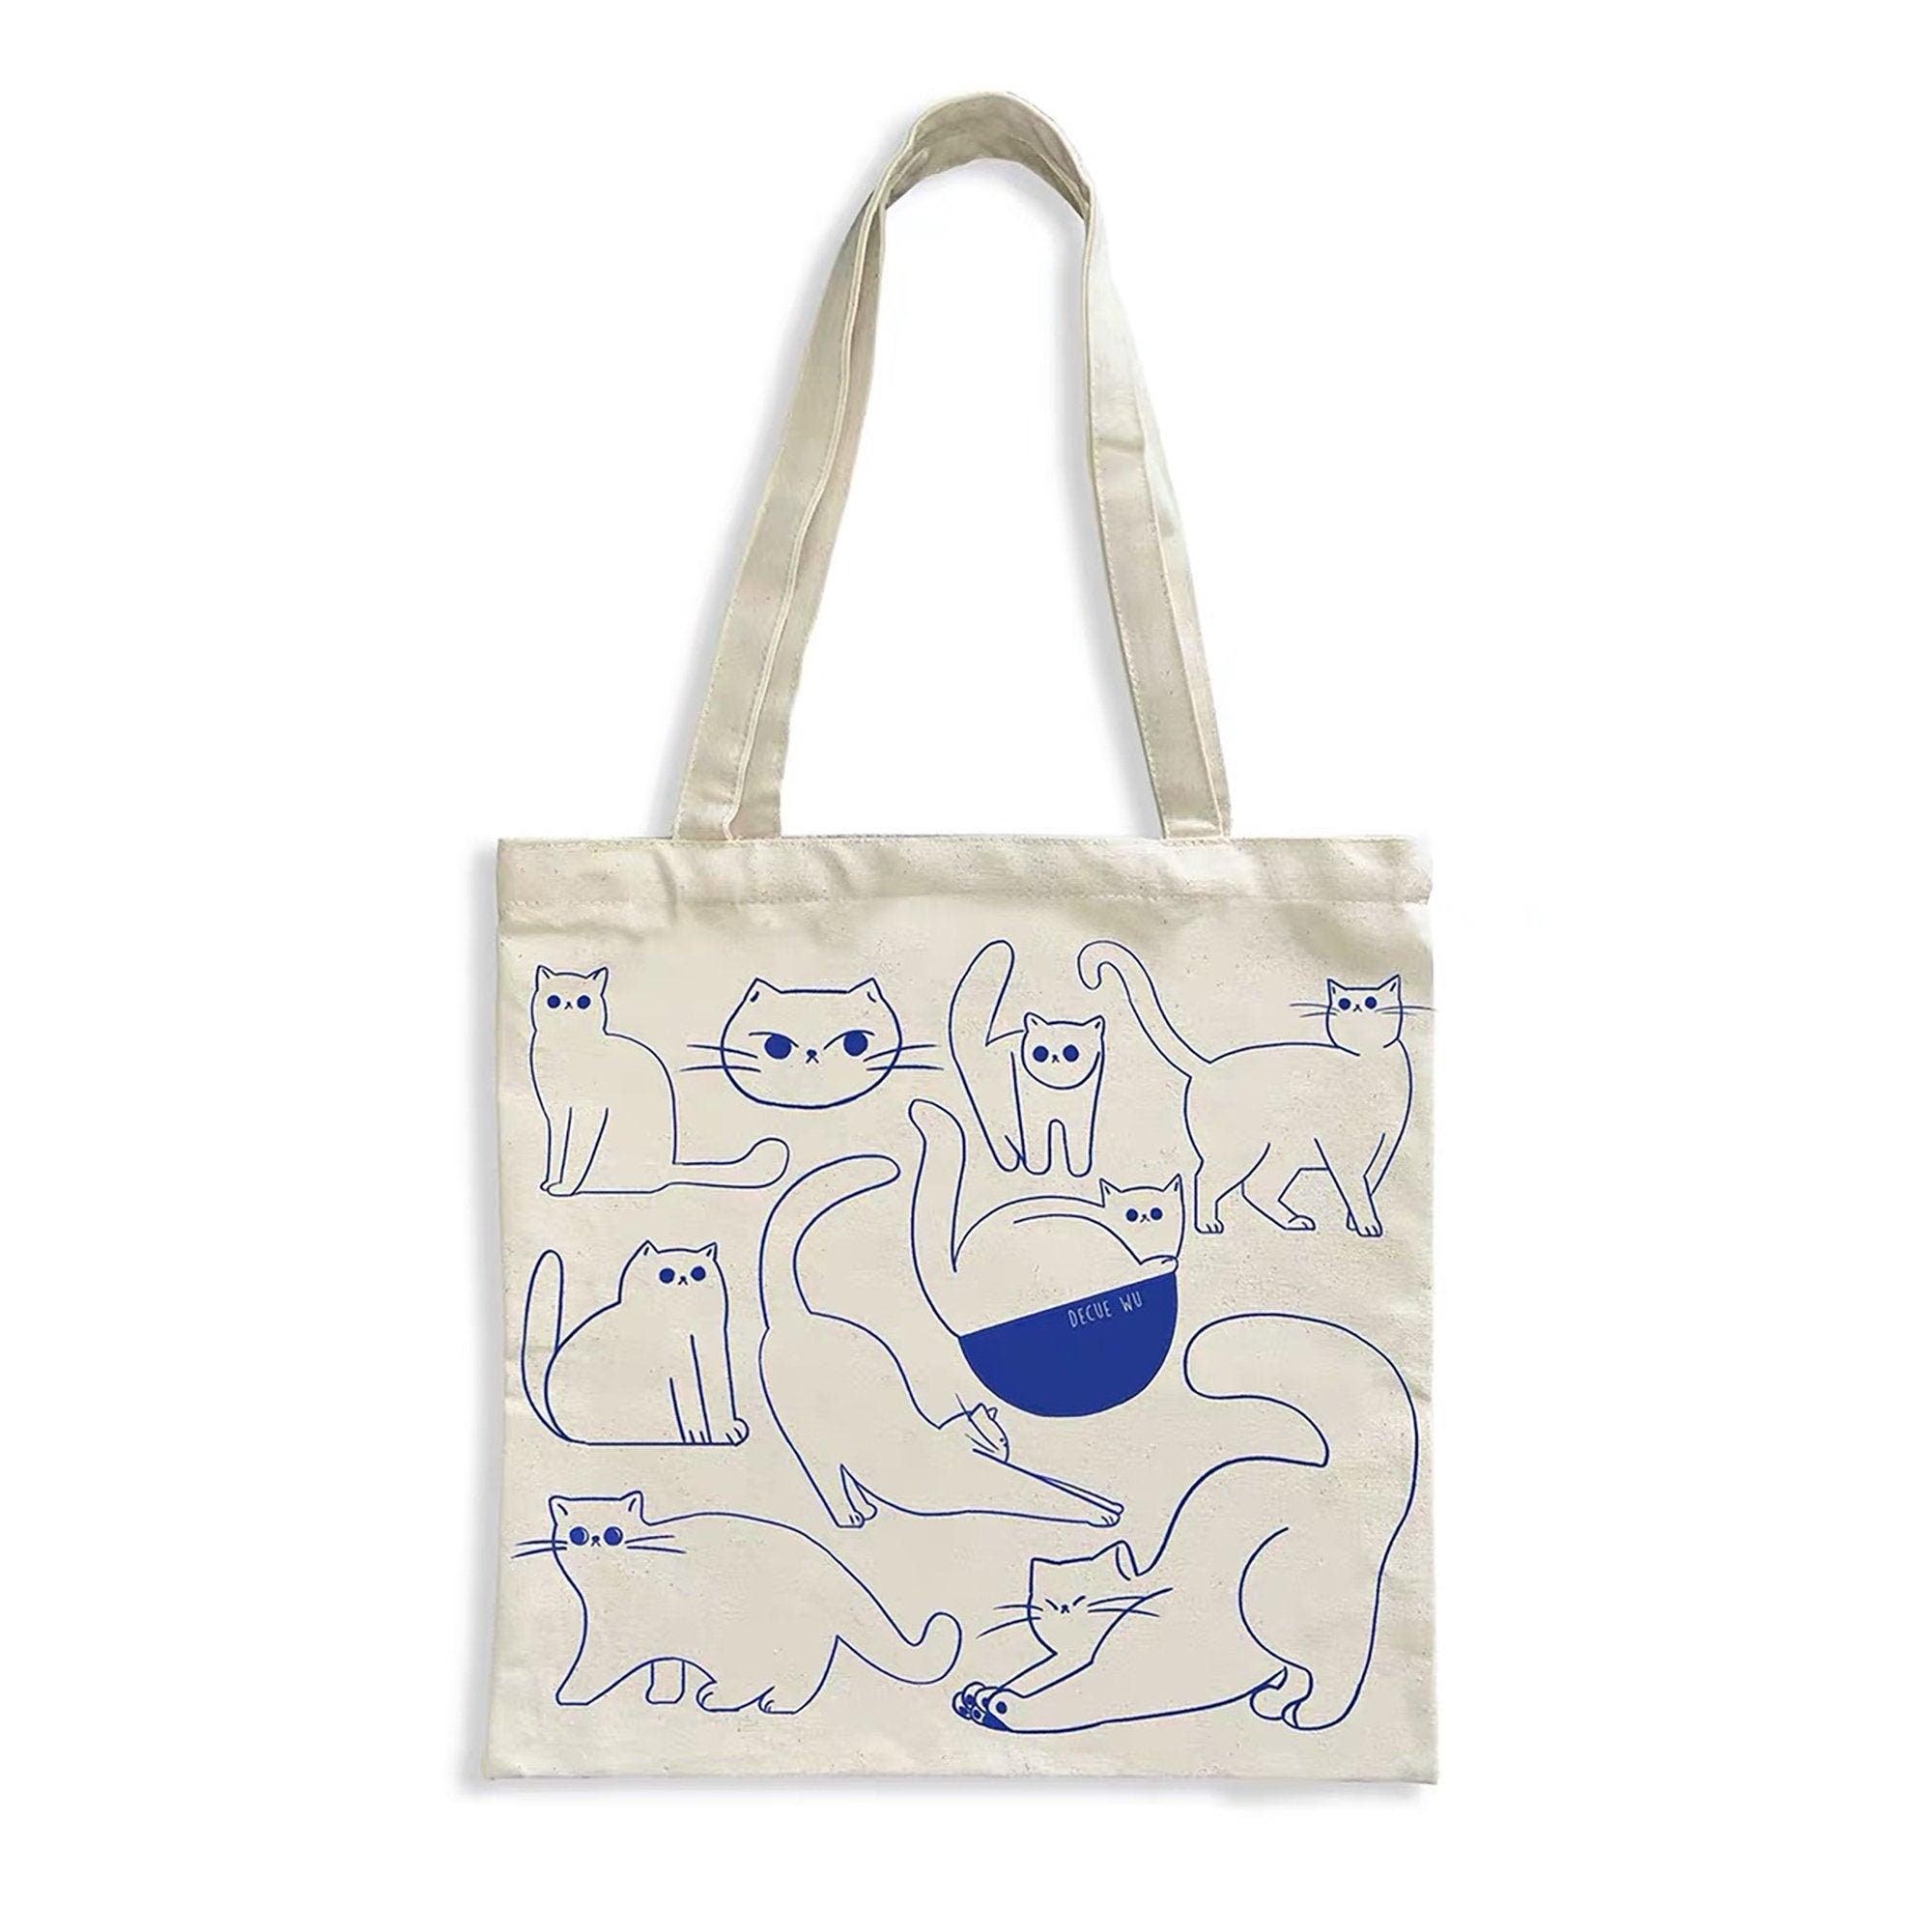 Kitty silkscreen tote bag (limited edition)